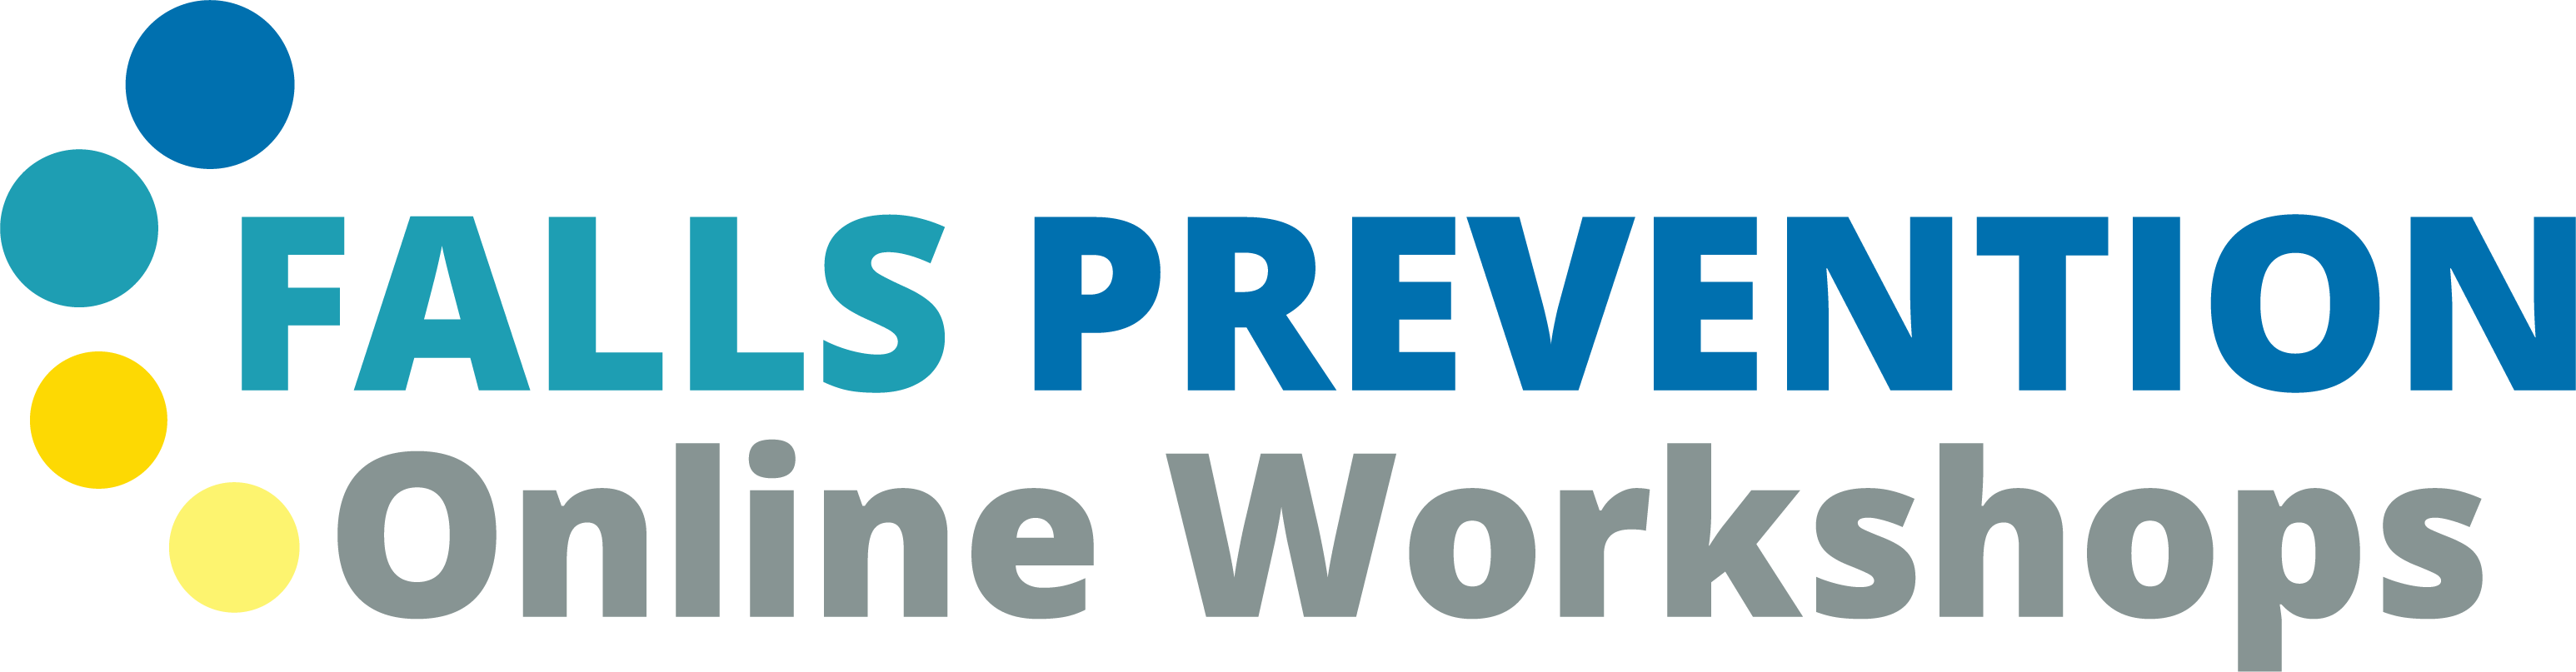 Falls Prevention Online Workshops logo